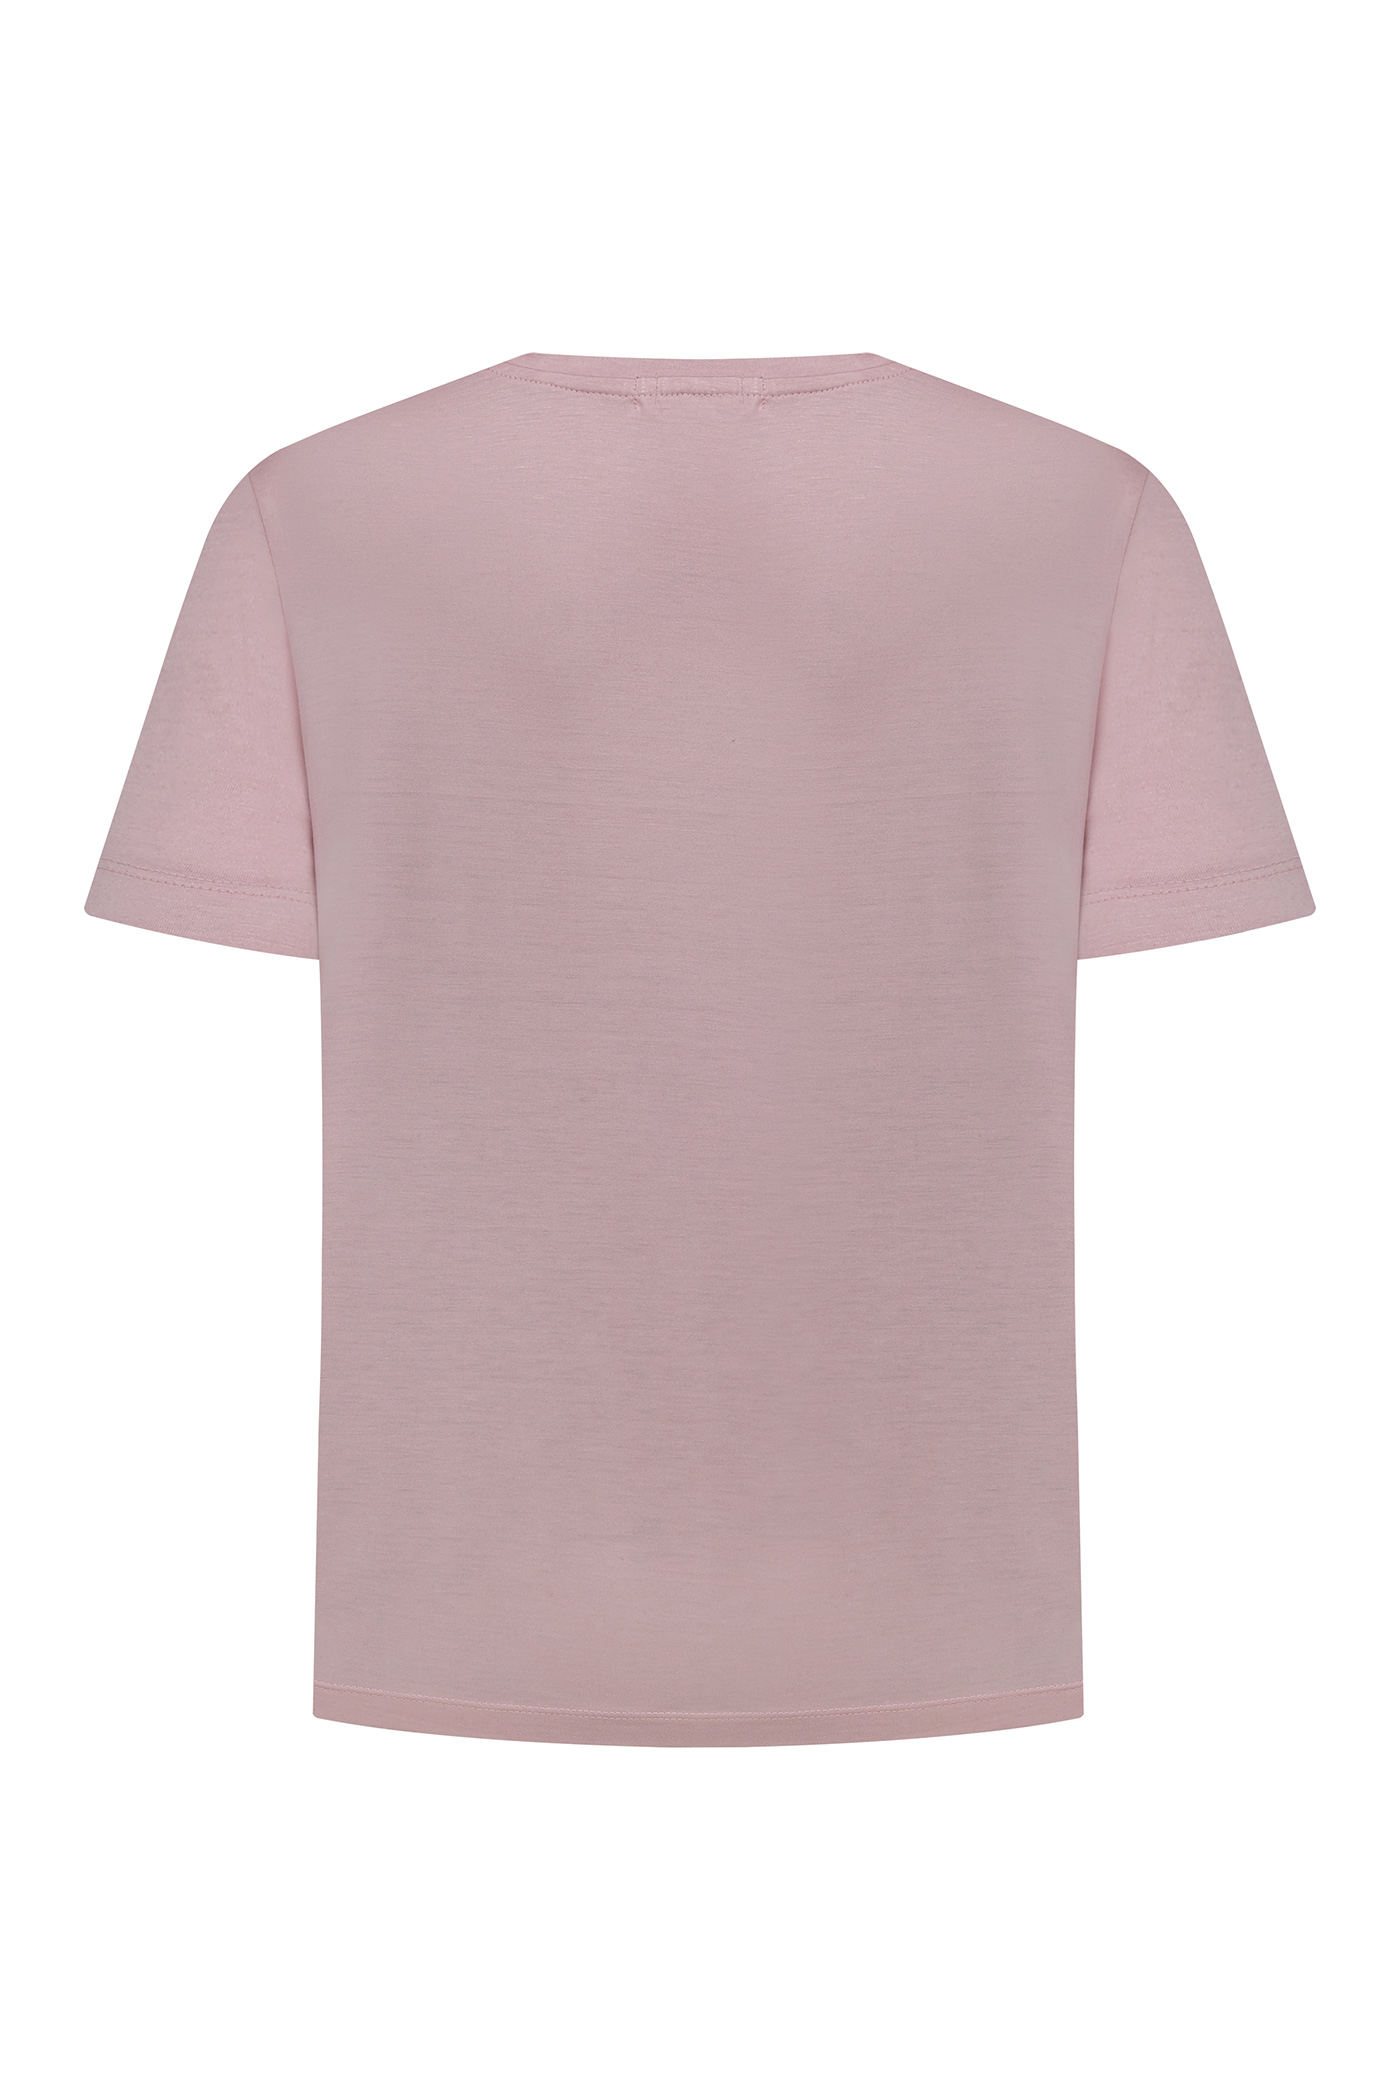 Cotton Tencel Top-Pink